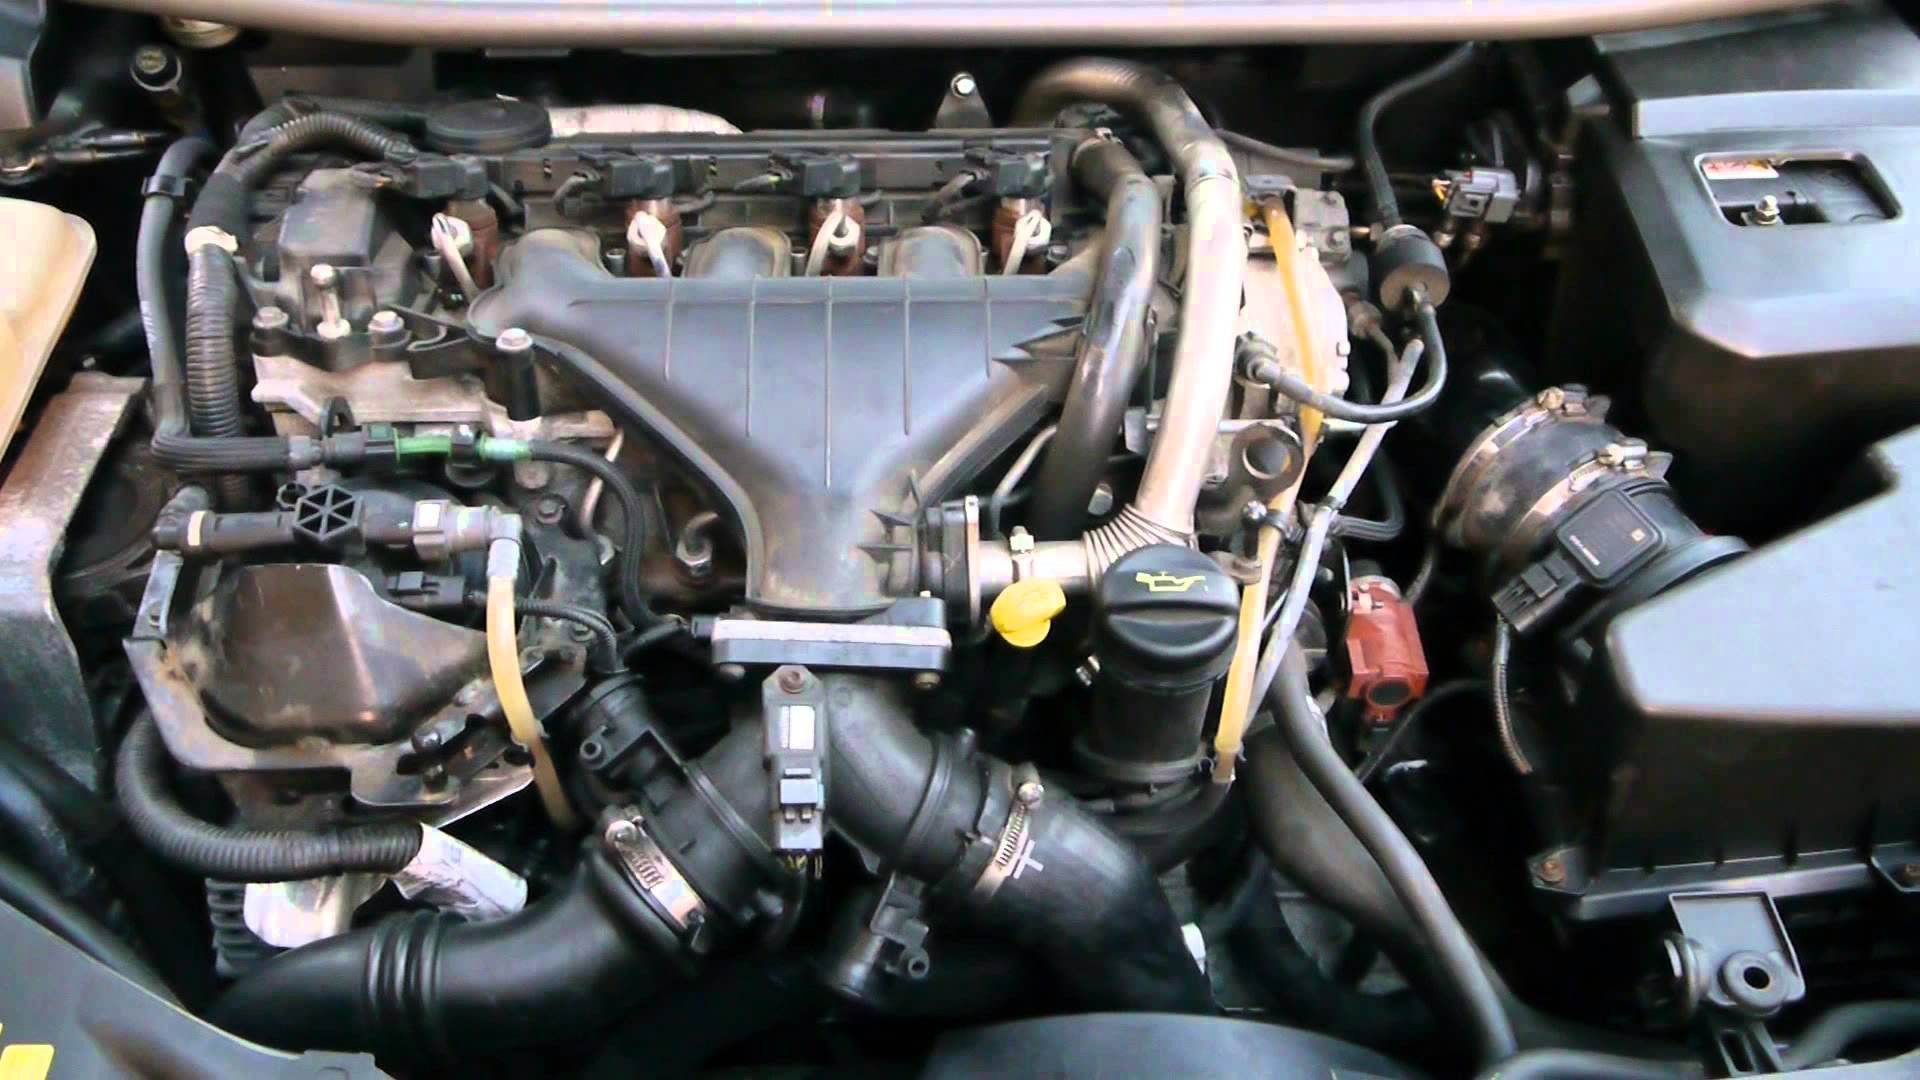 Car Body Part Diagram Problems with Volvo V50 Engine False Start but Runs Ok 14 11 2012 Of Car Body Part Diagram